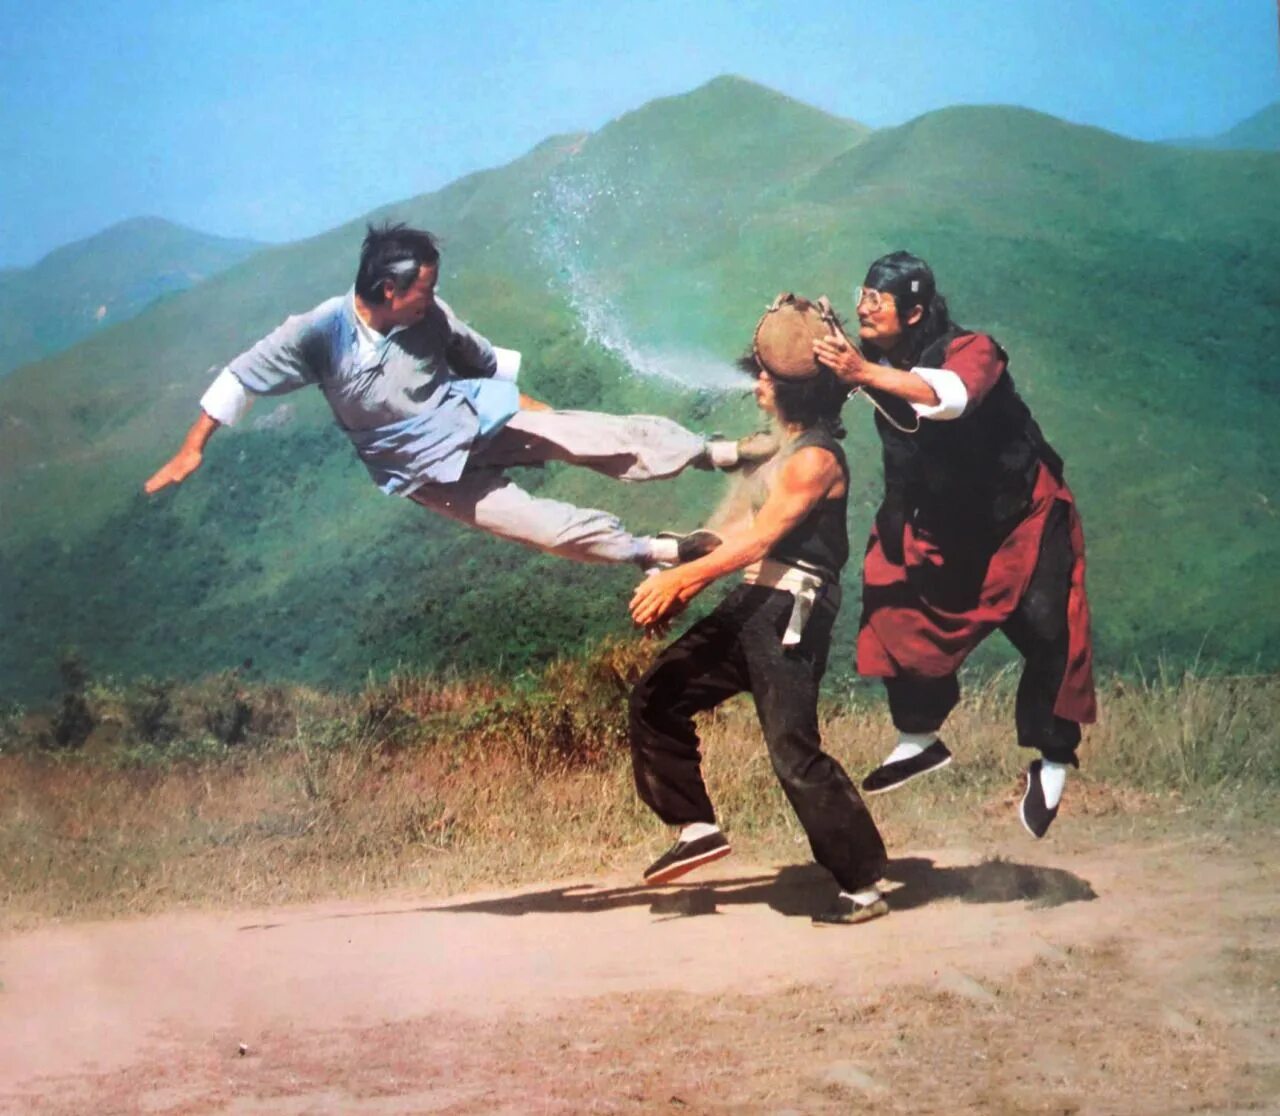 Kung fu kapers. Джеки Чан кунг фу. Мастер кунг фу Джеки Чан. Молодой мастер Джеки Чан. Джеки Чан молодой мастер 1980.